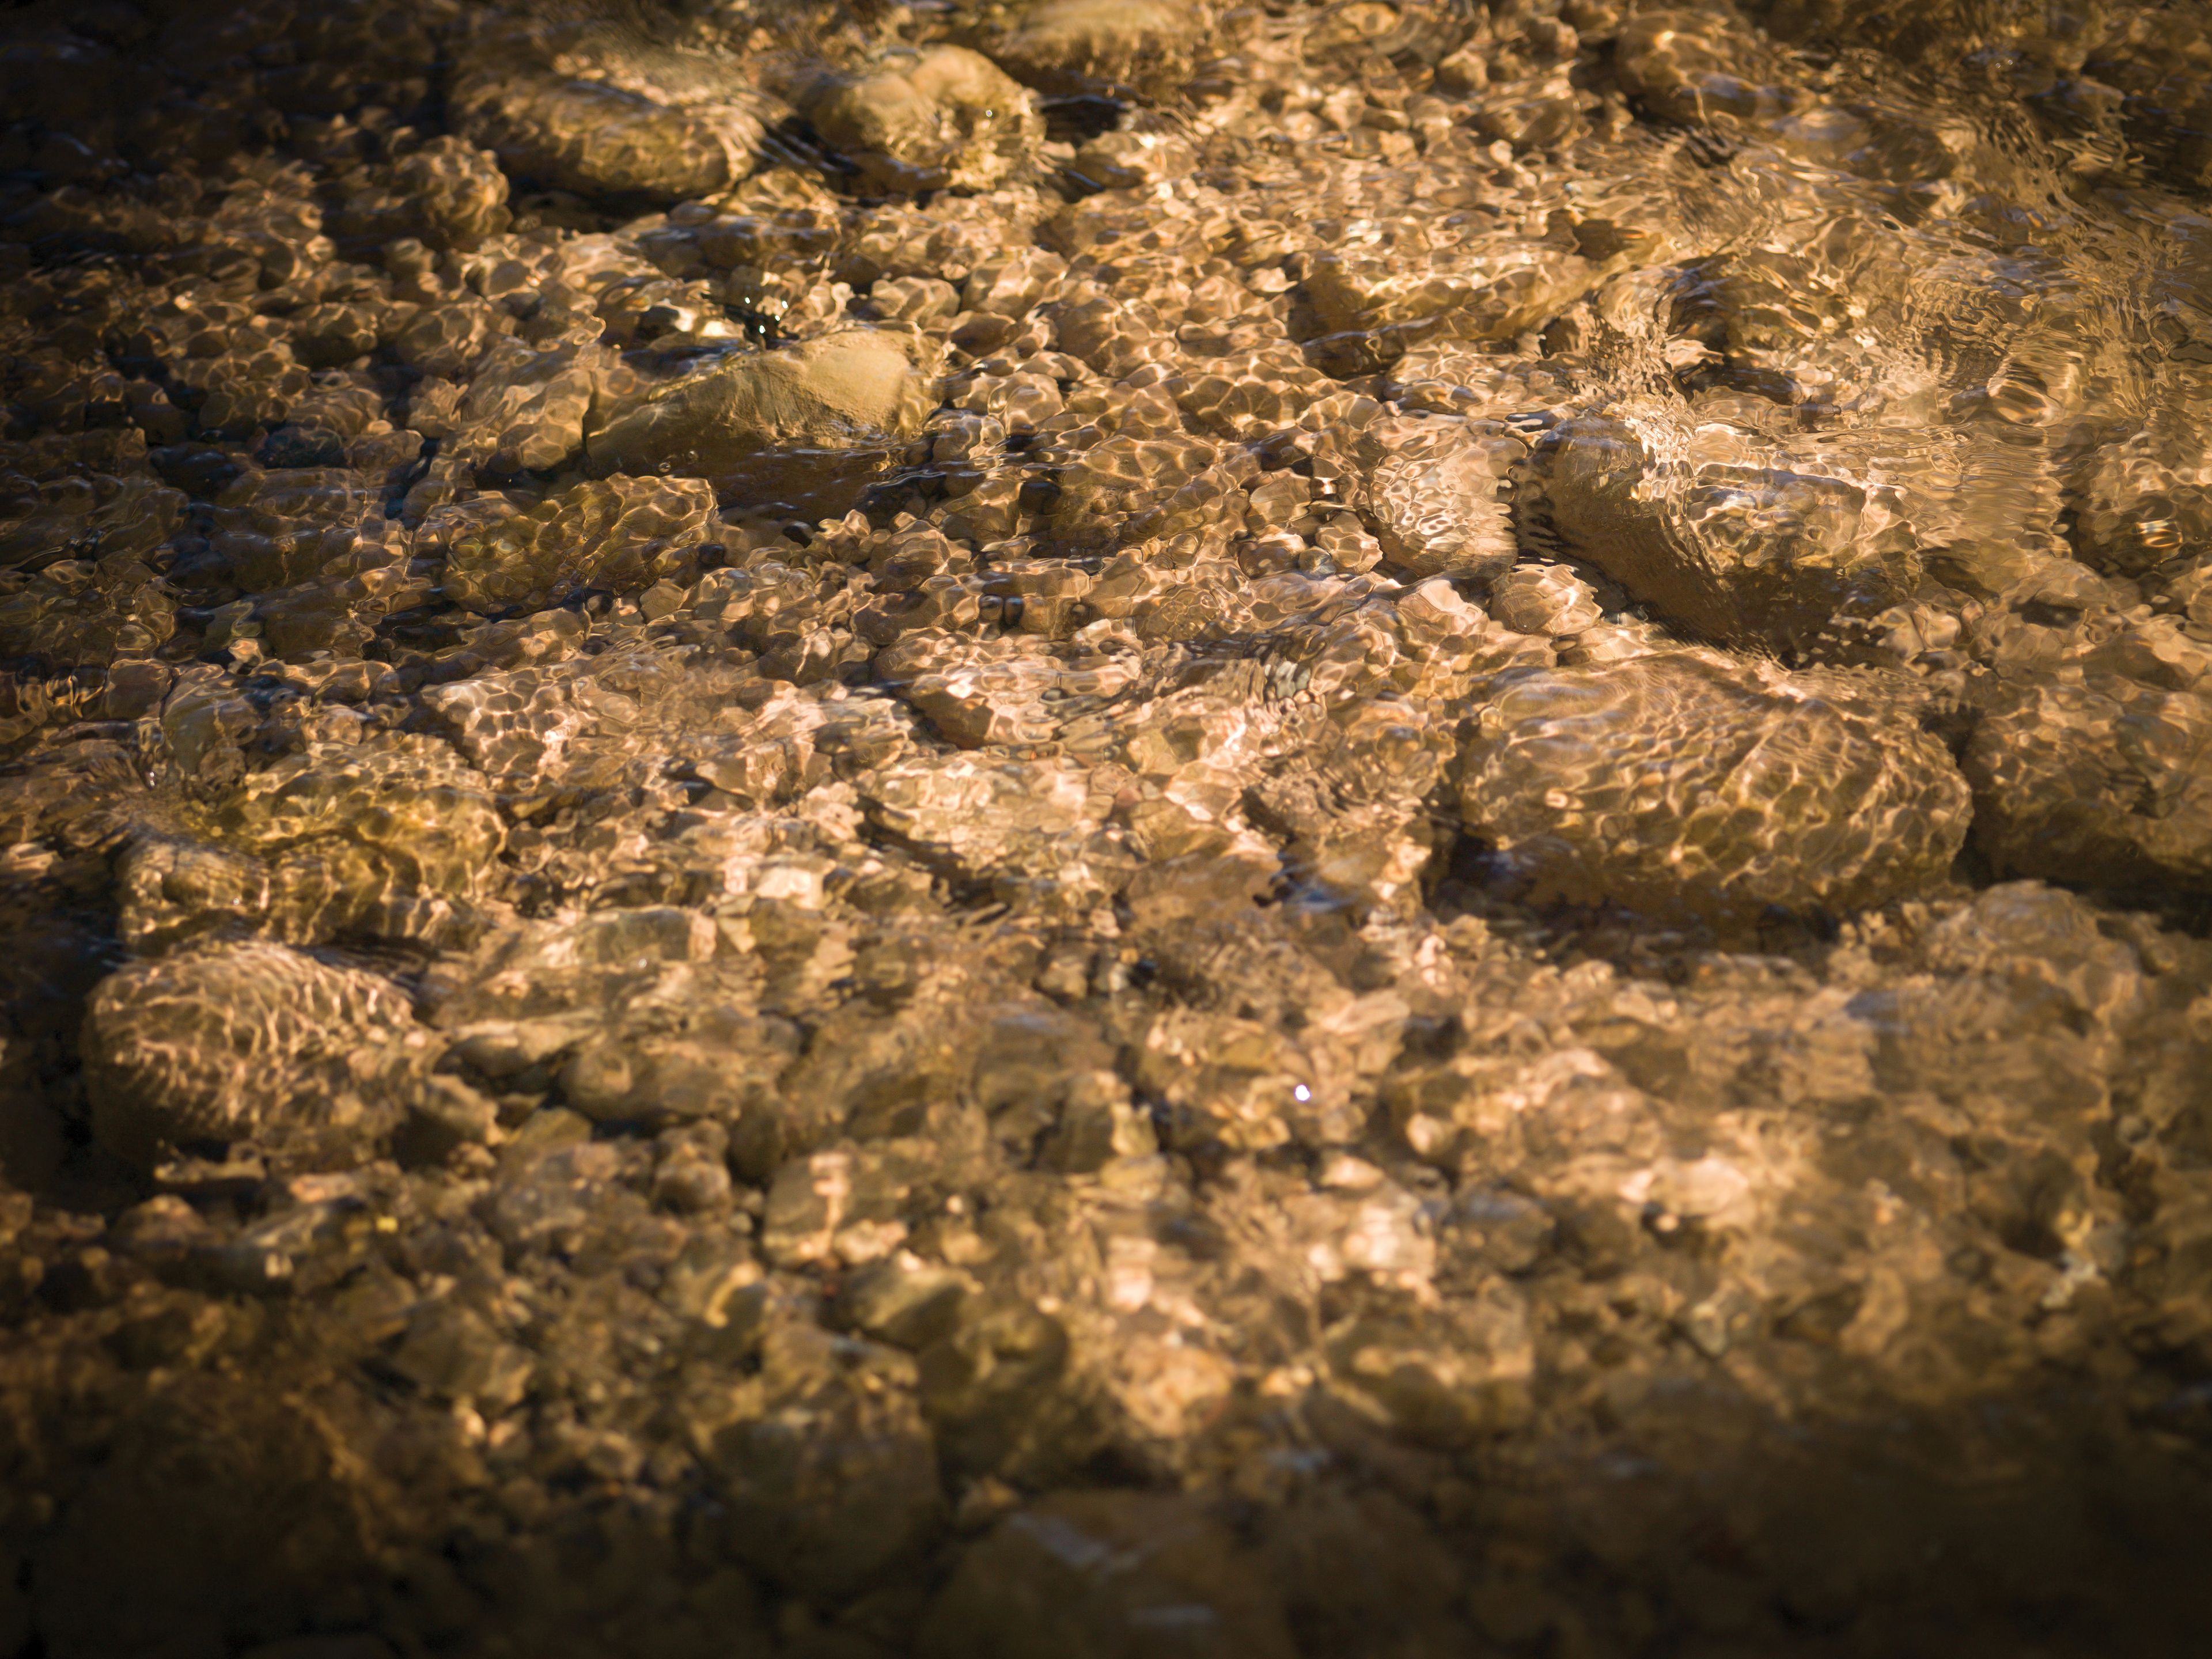 Rocks sit below the surface of water.